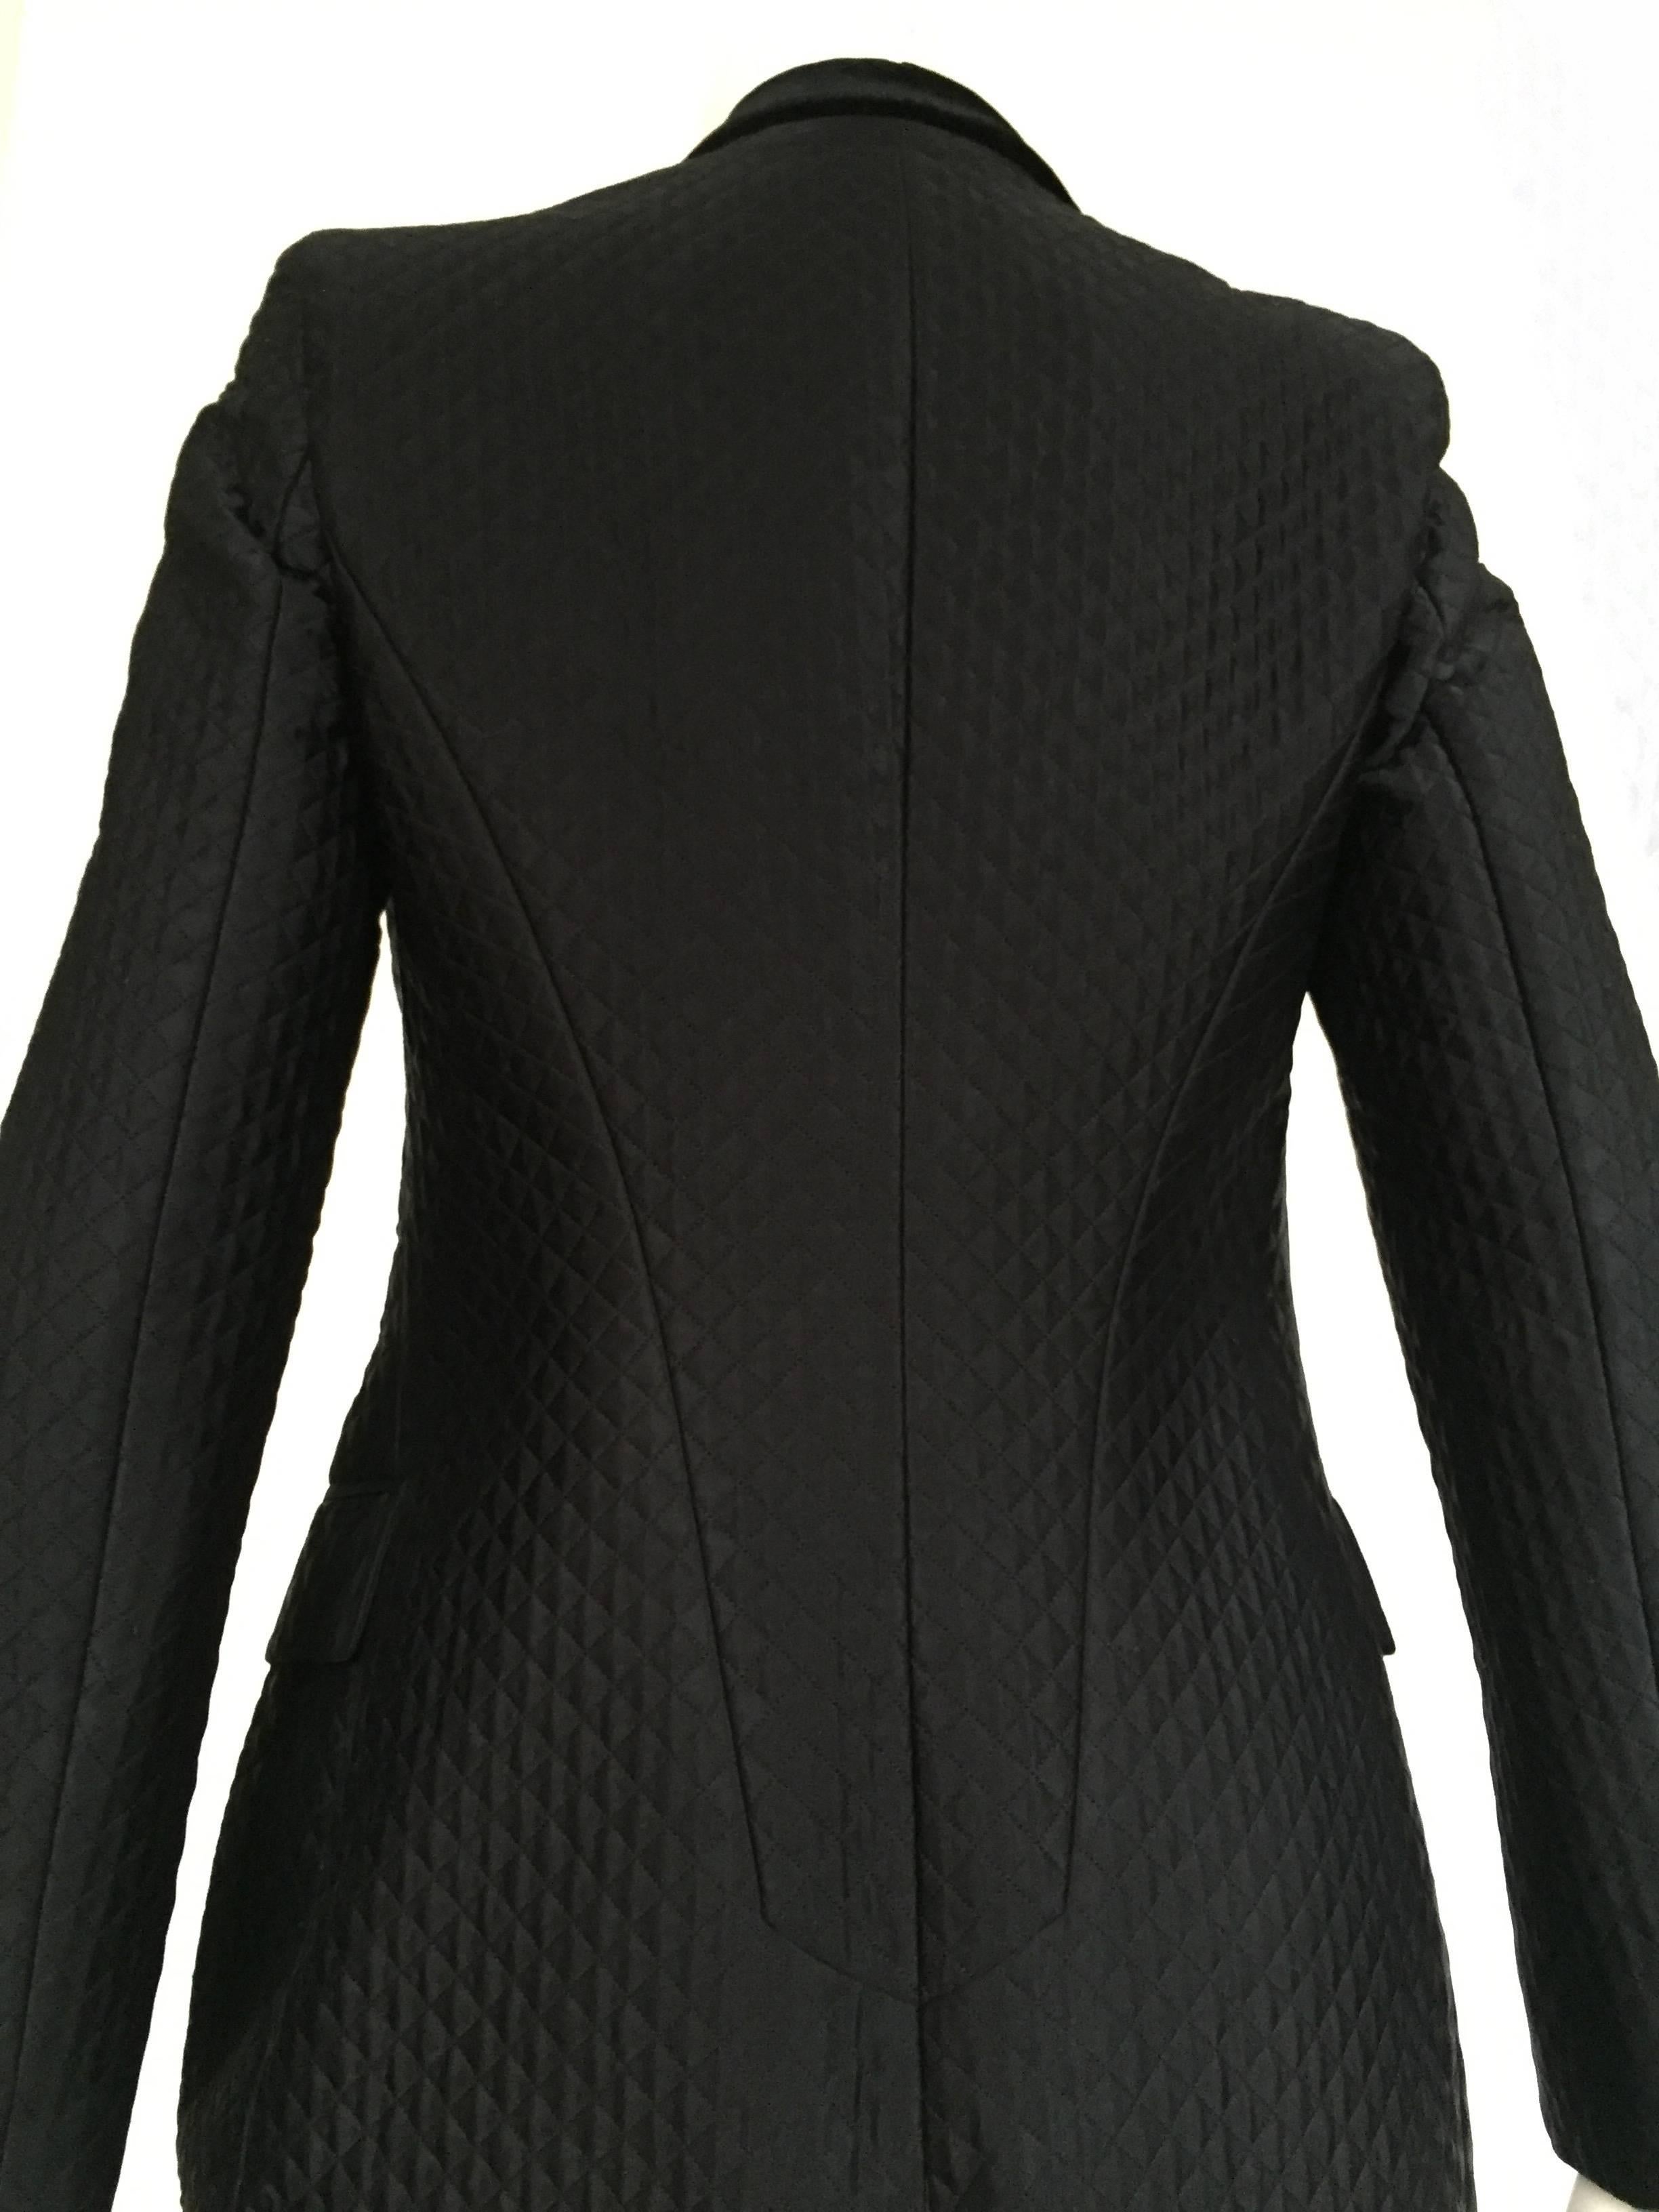 Alexander McQueen 2005 black silk long coat size 8. For Sale 4